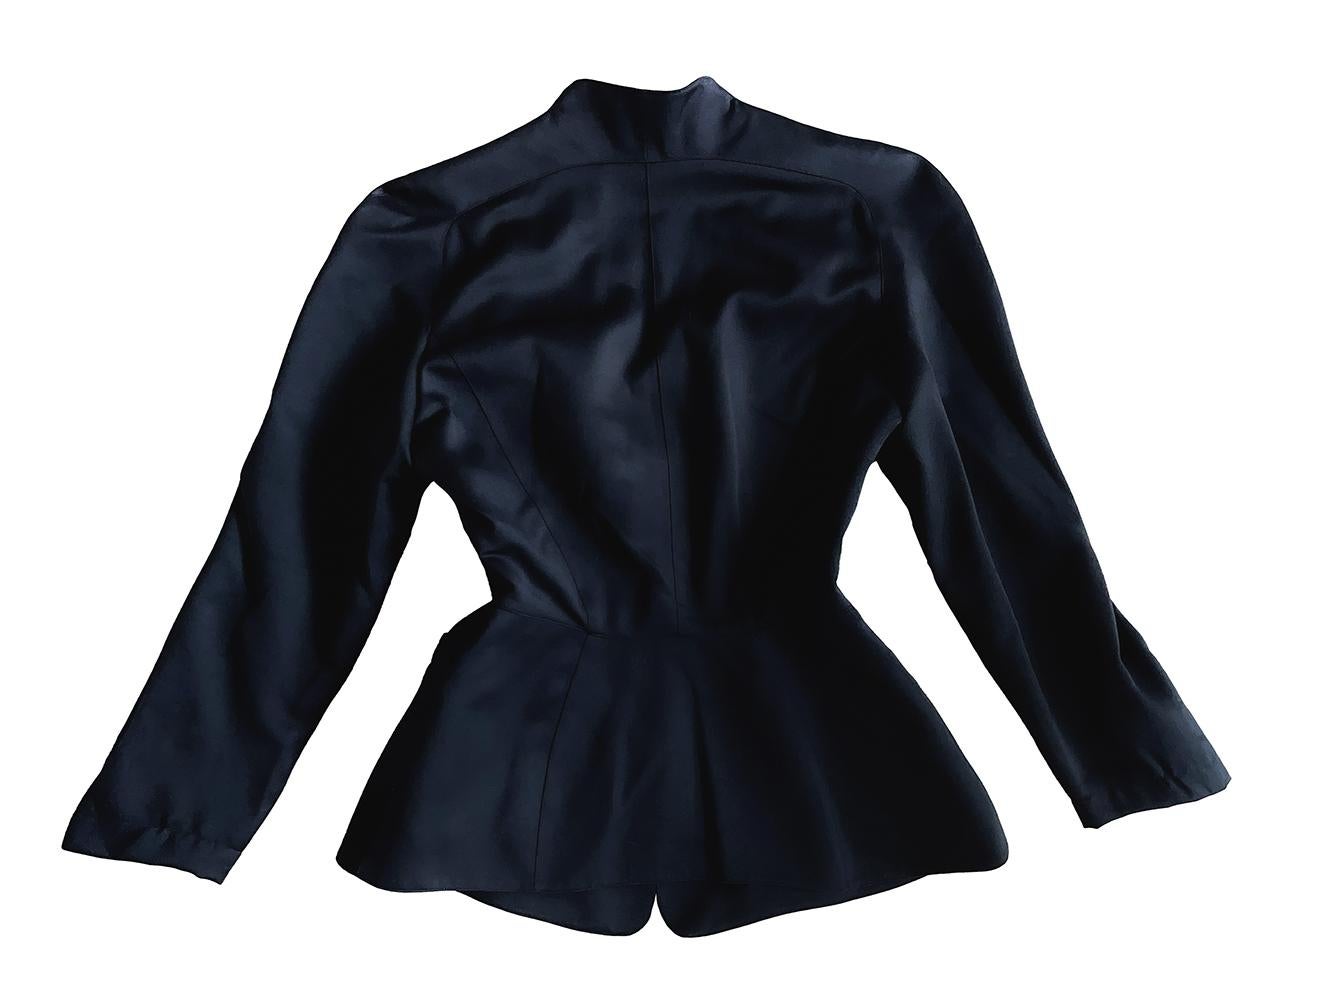 Thierry Mugler Black Suit Sculptural Jacket Skirtsuit For Sale 5